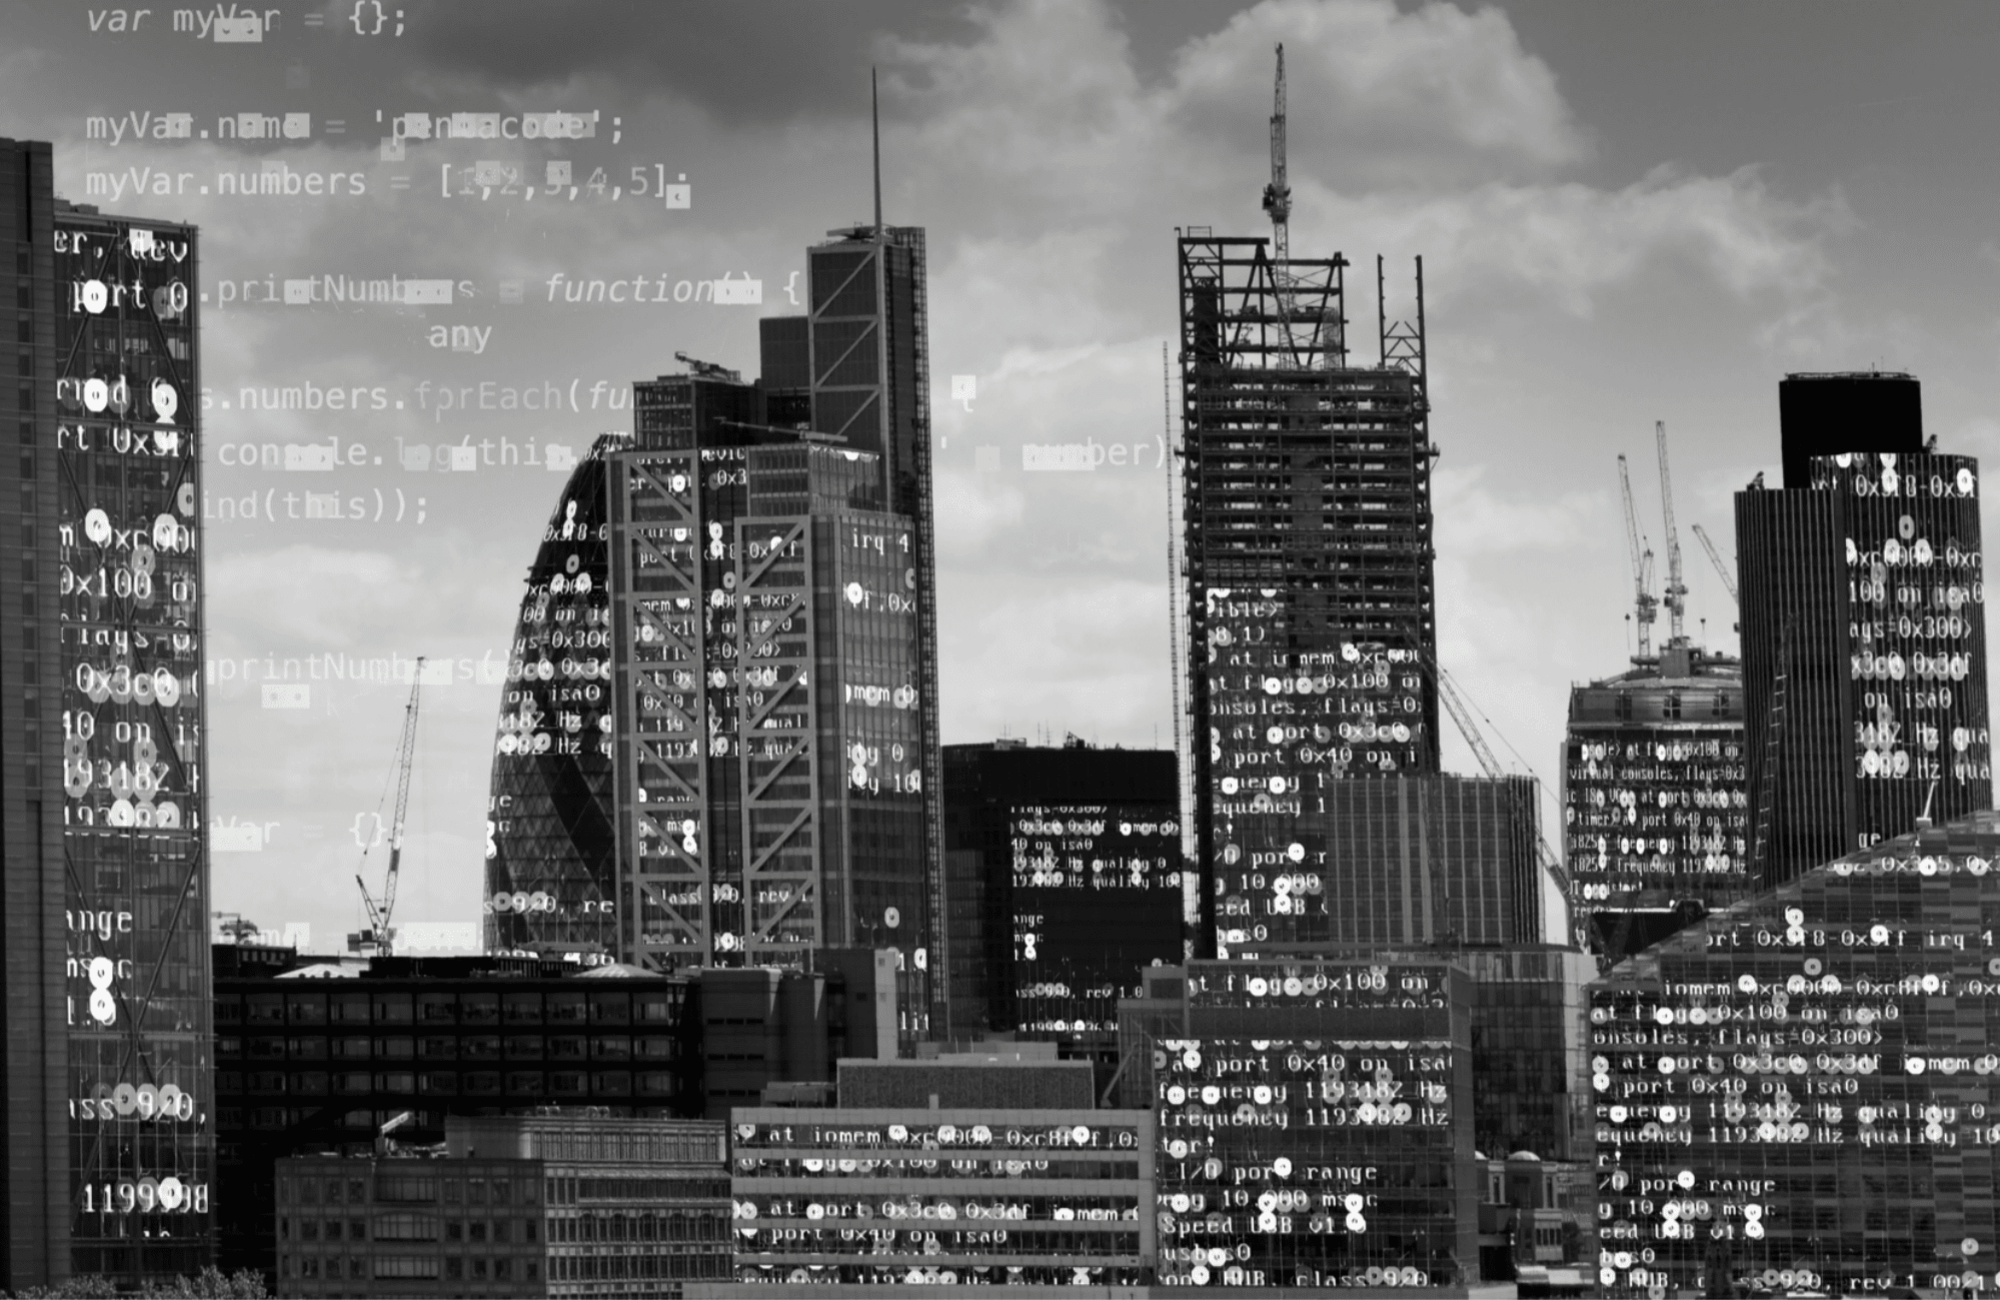 Gigabit group banner image greyscale london skyline with code overlay